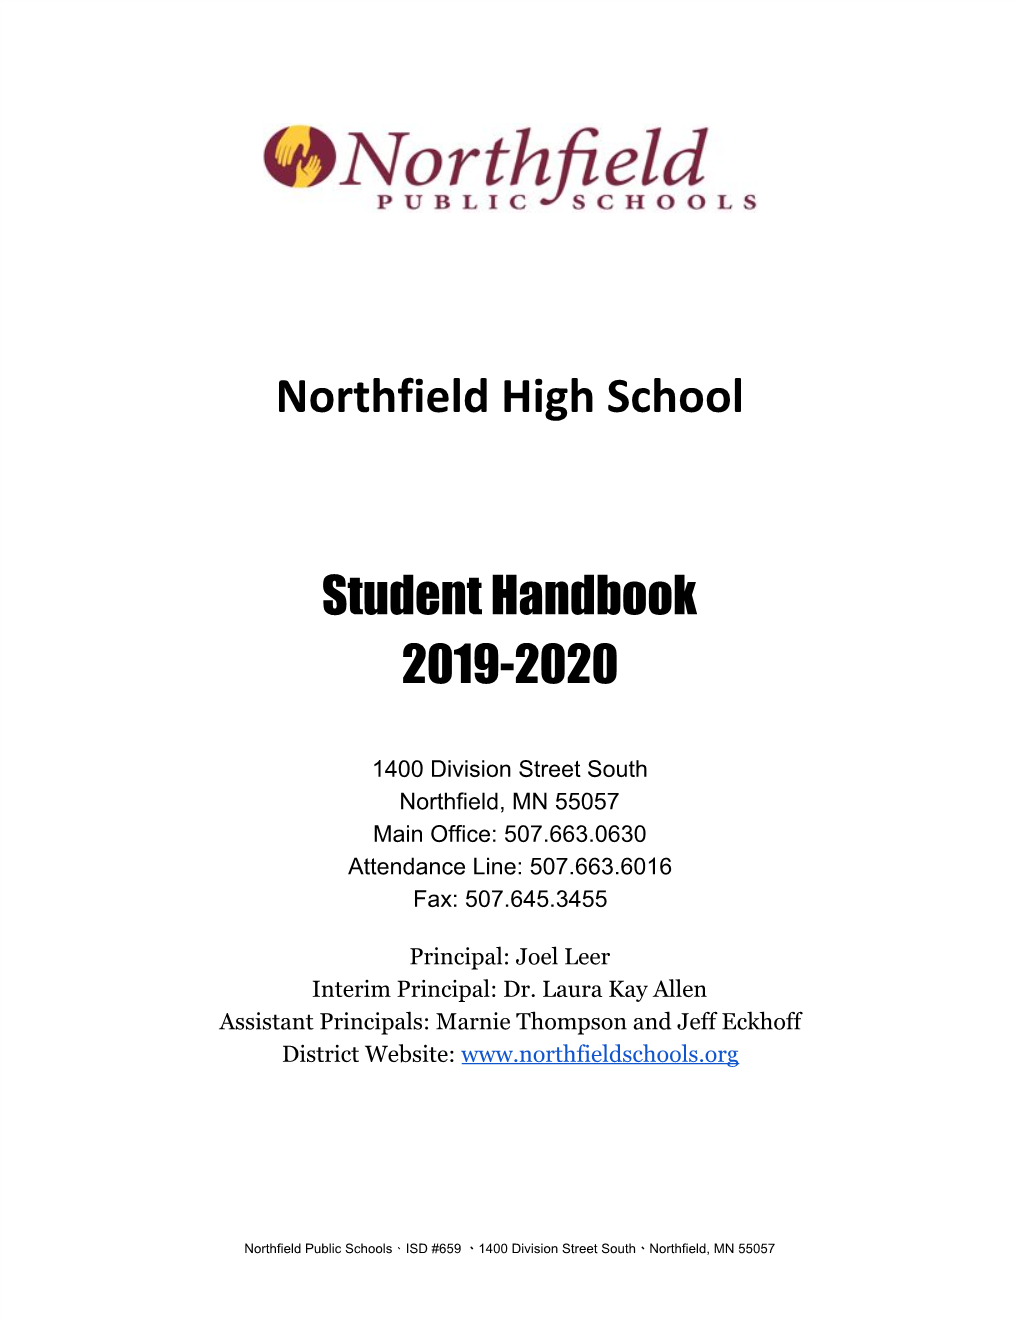 Northfield High School Student Handbook 2019-2020